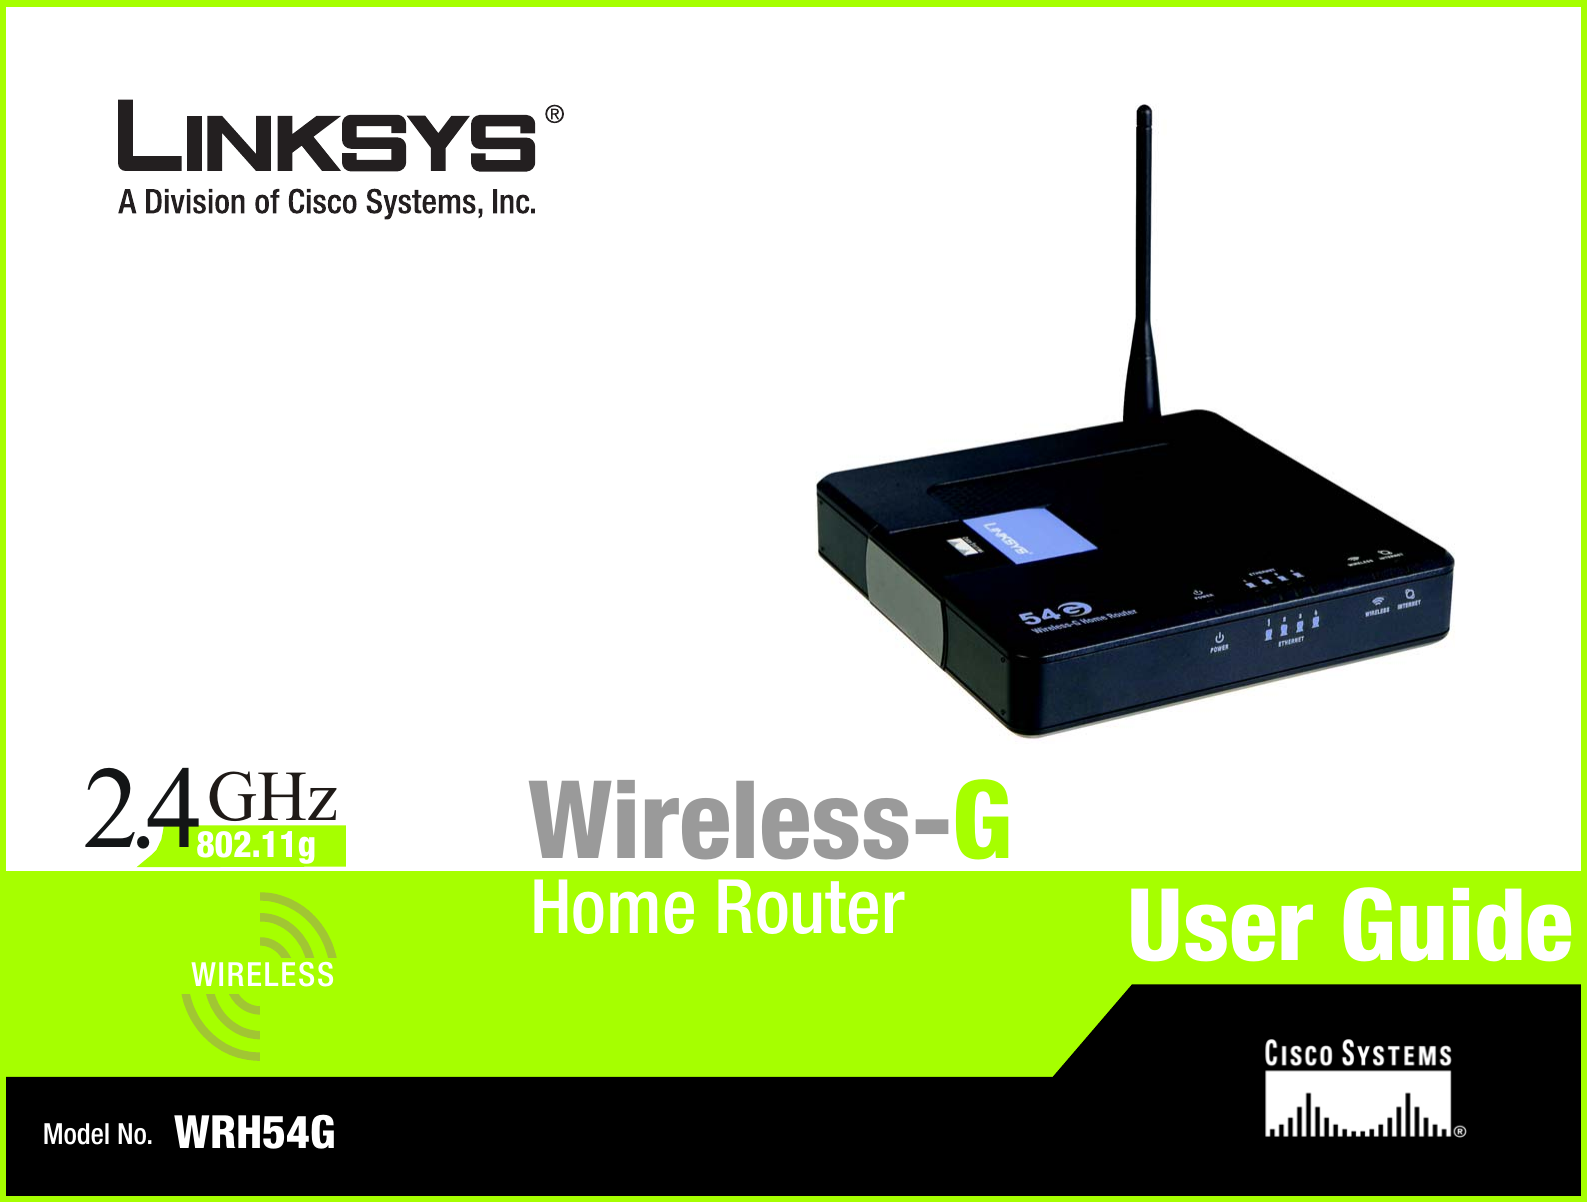 Model No.Home RouterWireless-GWRH54GUser GuideWIRELESSGHz2.4802.11g